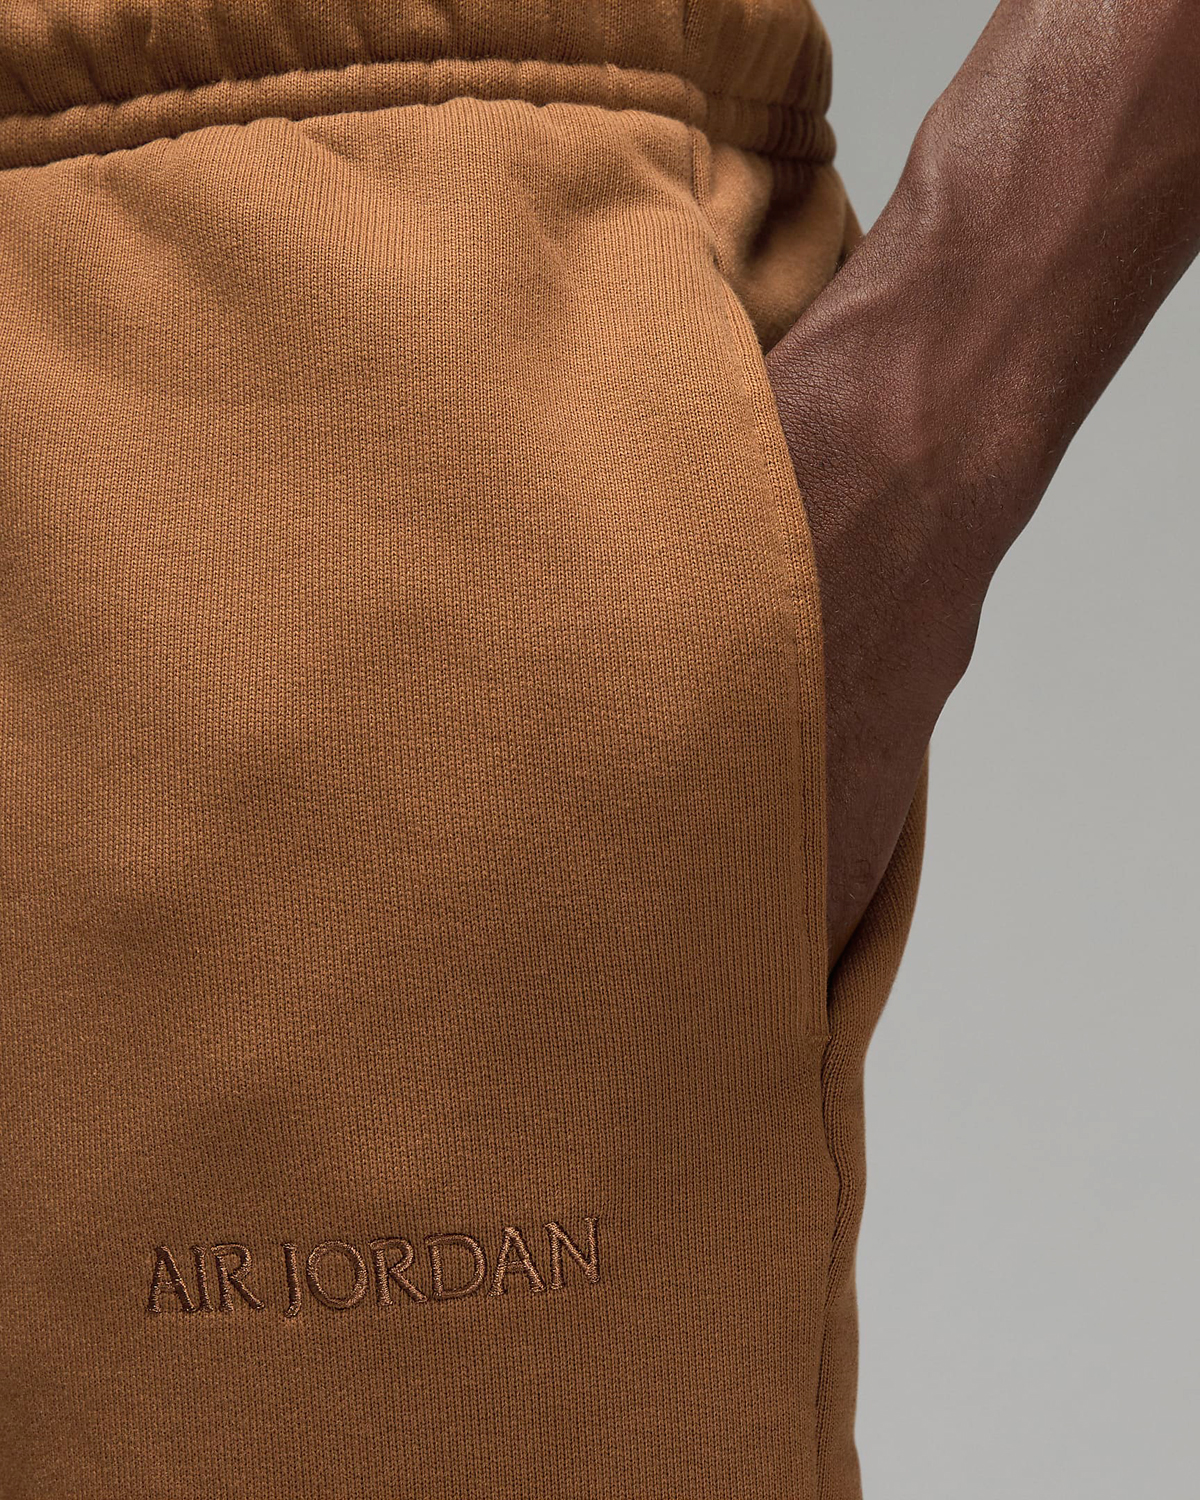 Air-Jordan-Wordmark-Fleece-Pants-Light-British-Tan-3